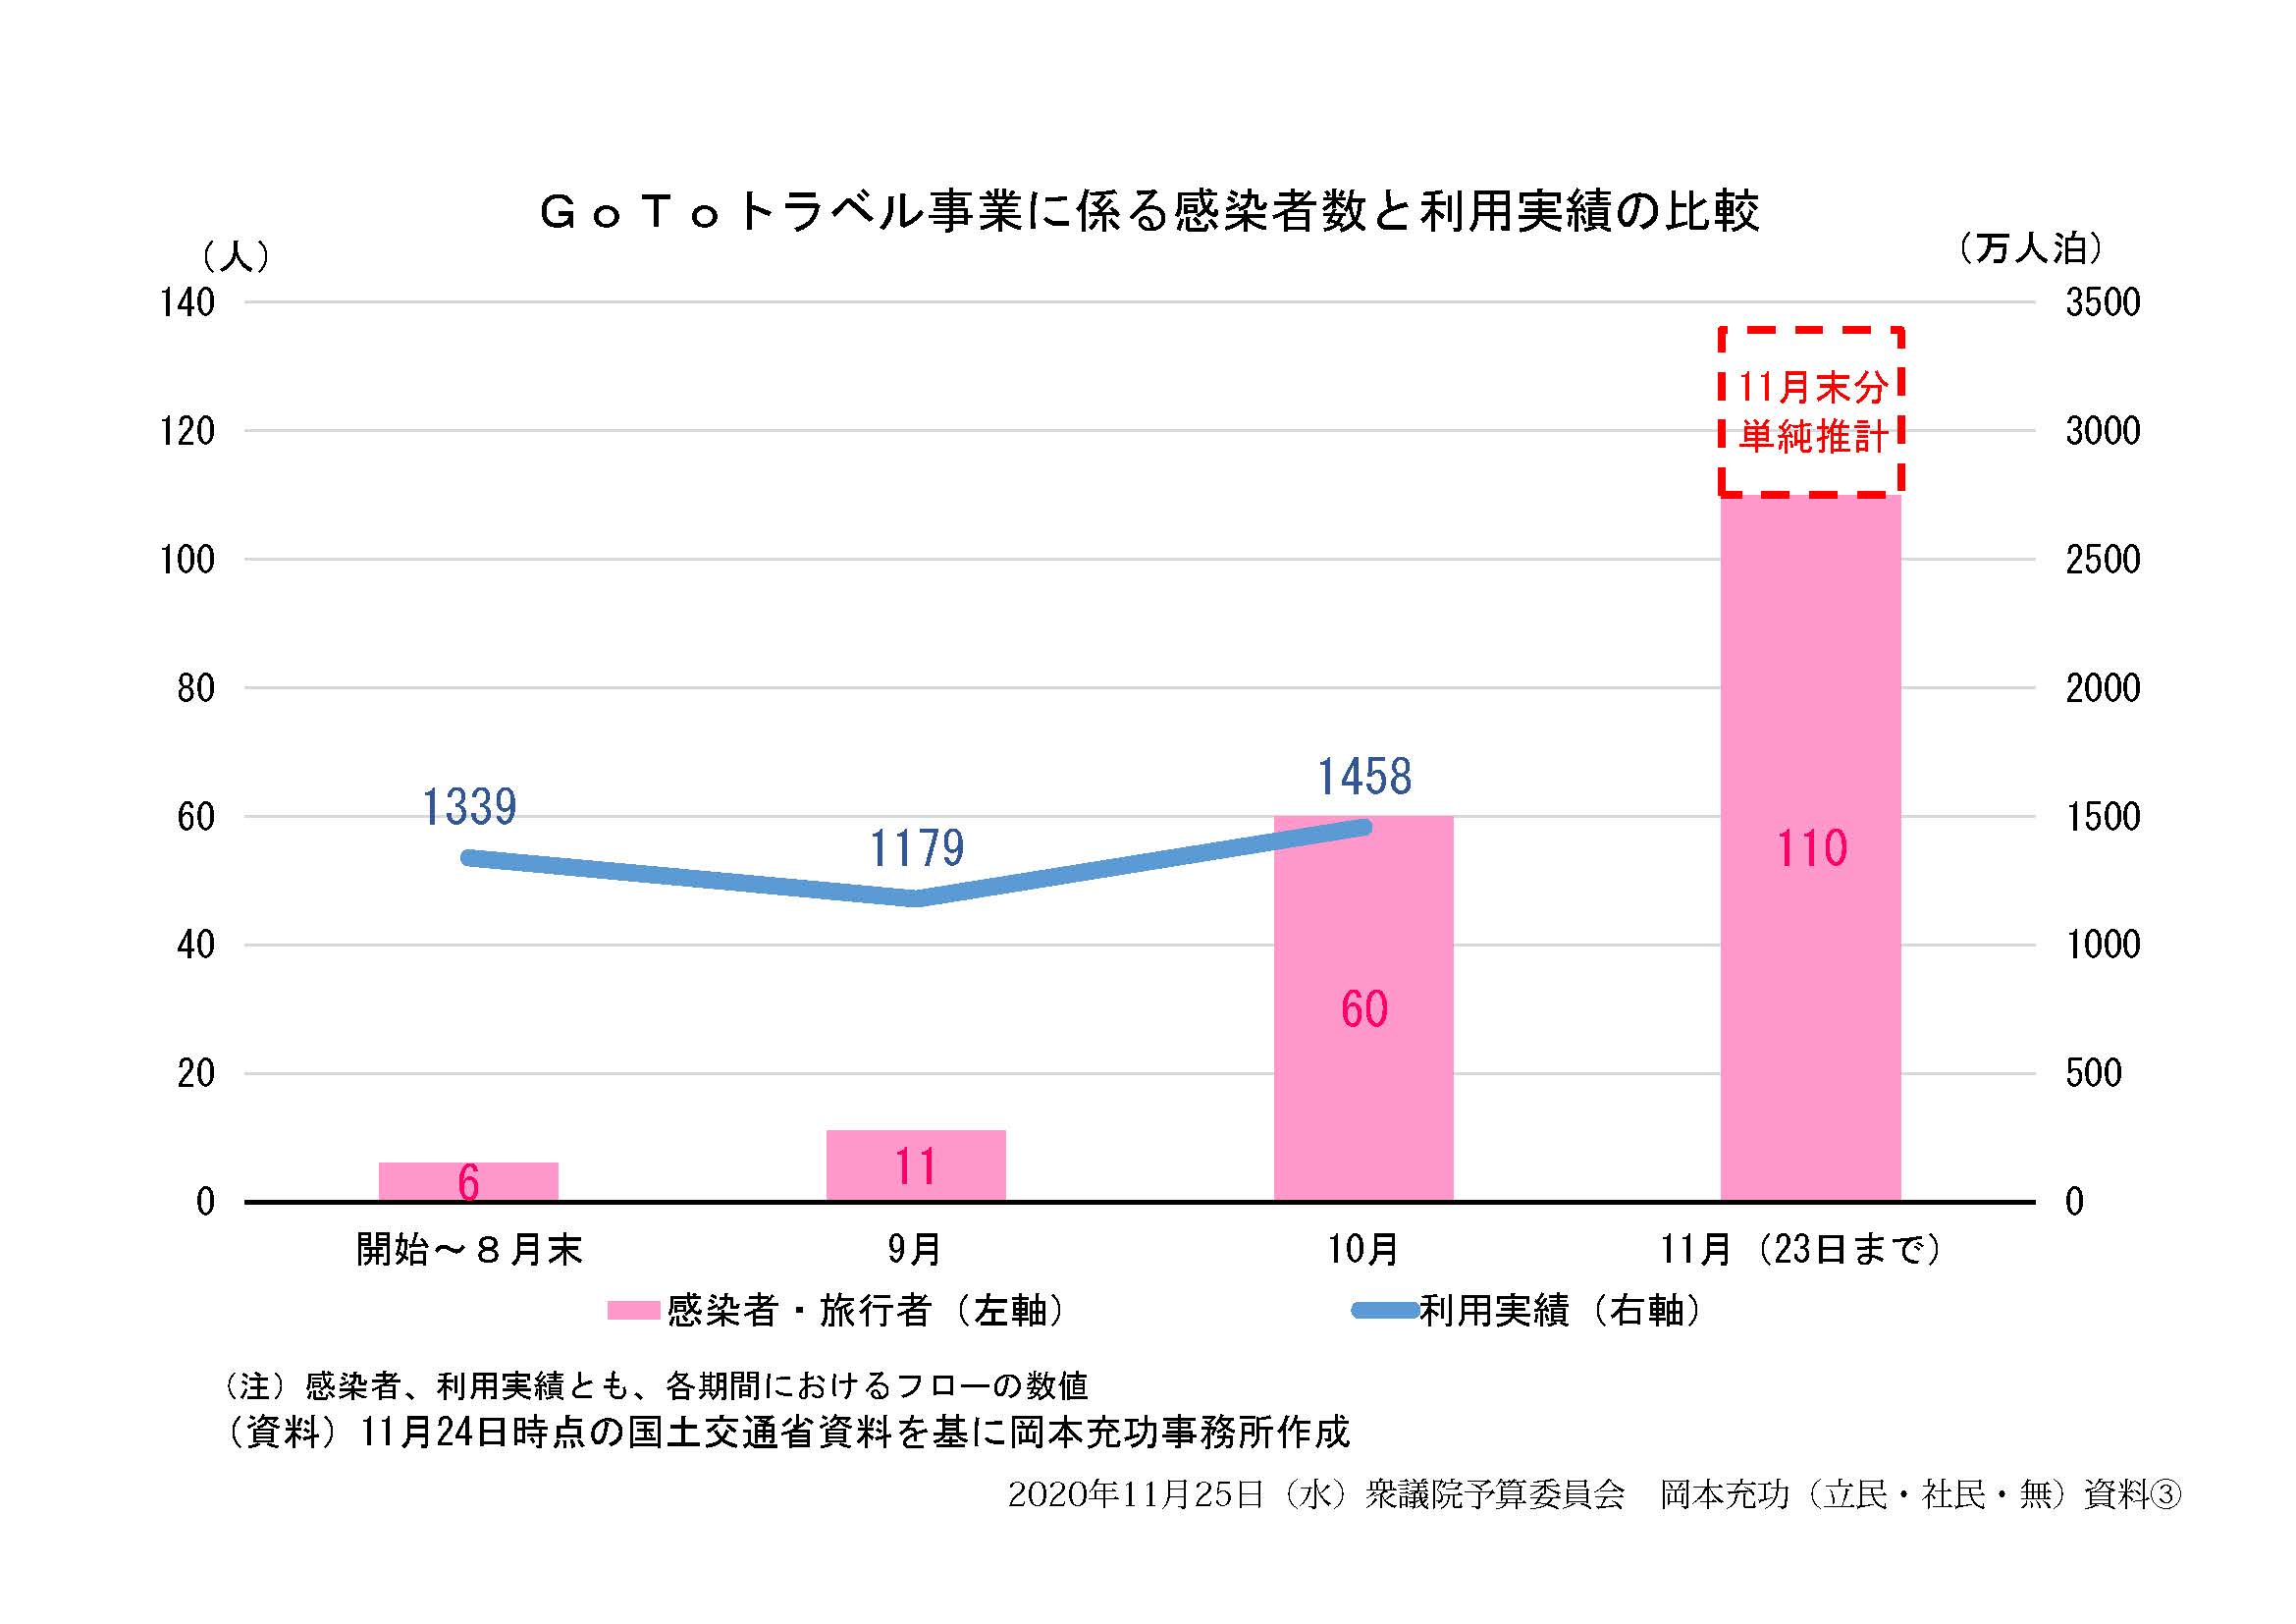 GoToトラベル事業に係る感染者数と利用実績の比較.jpg